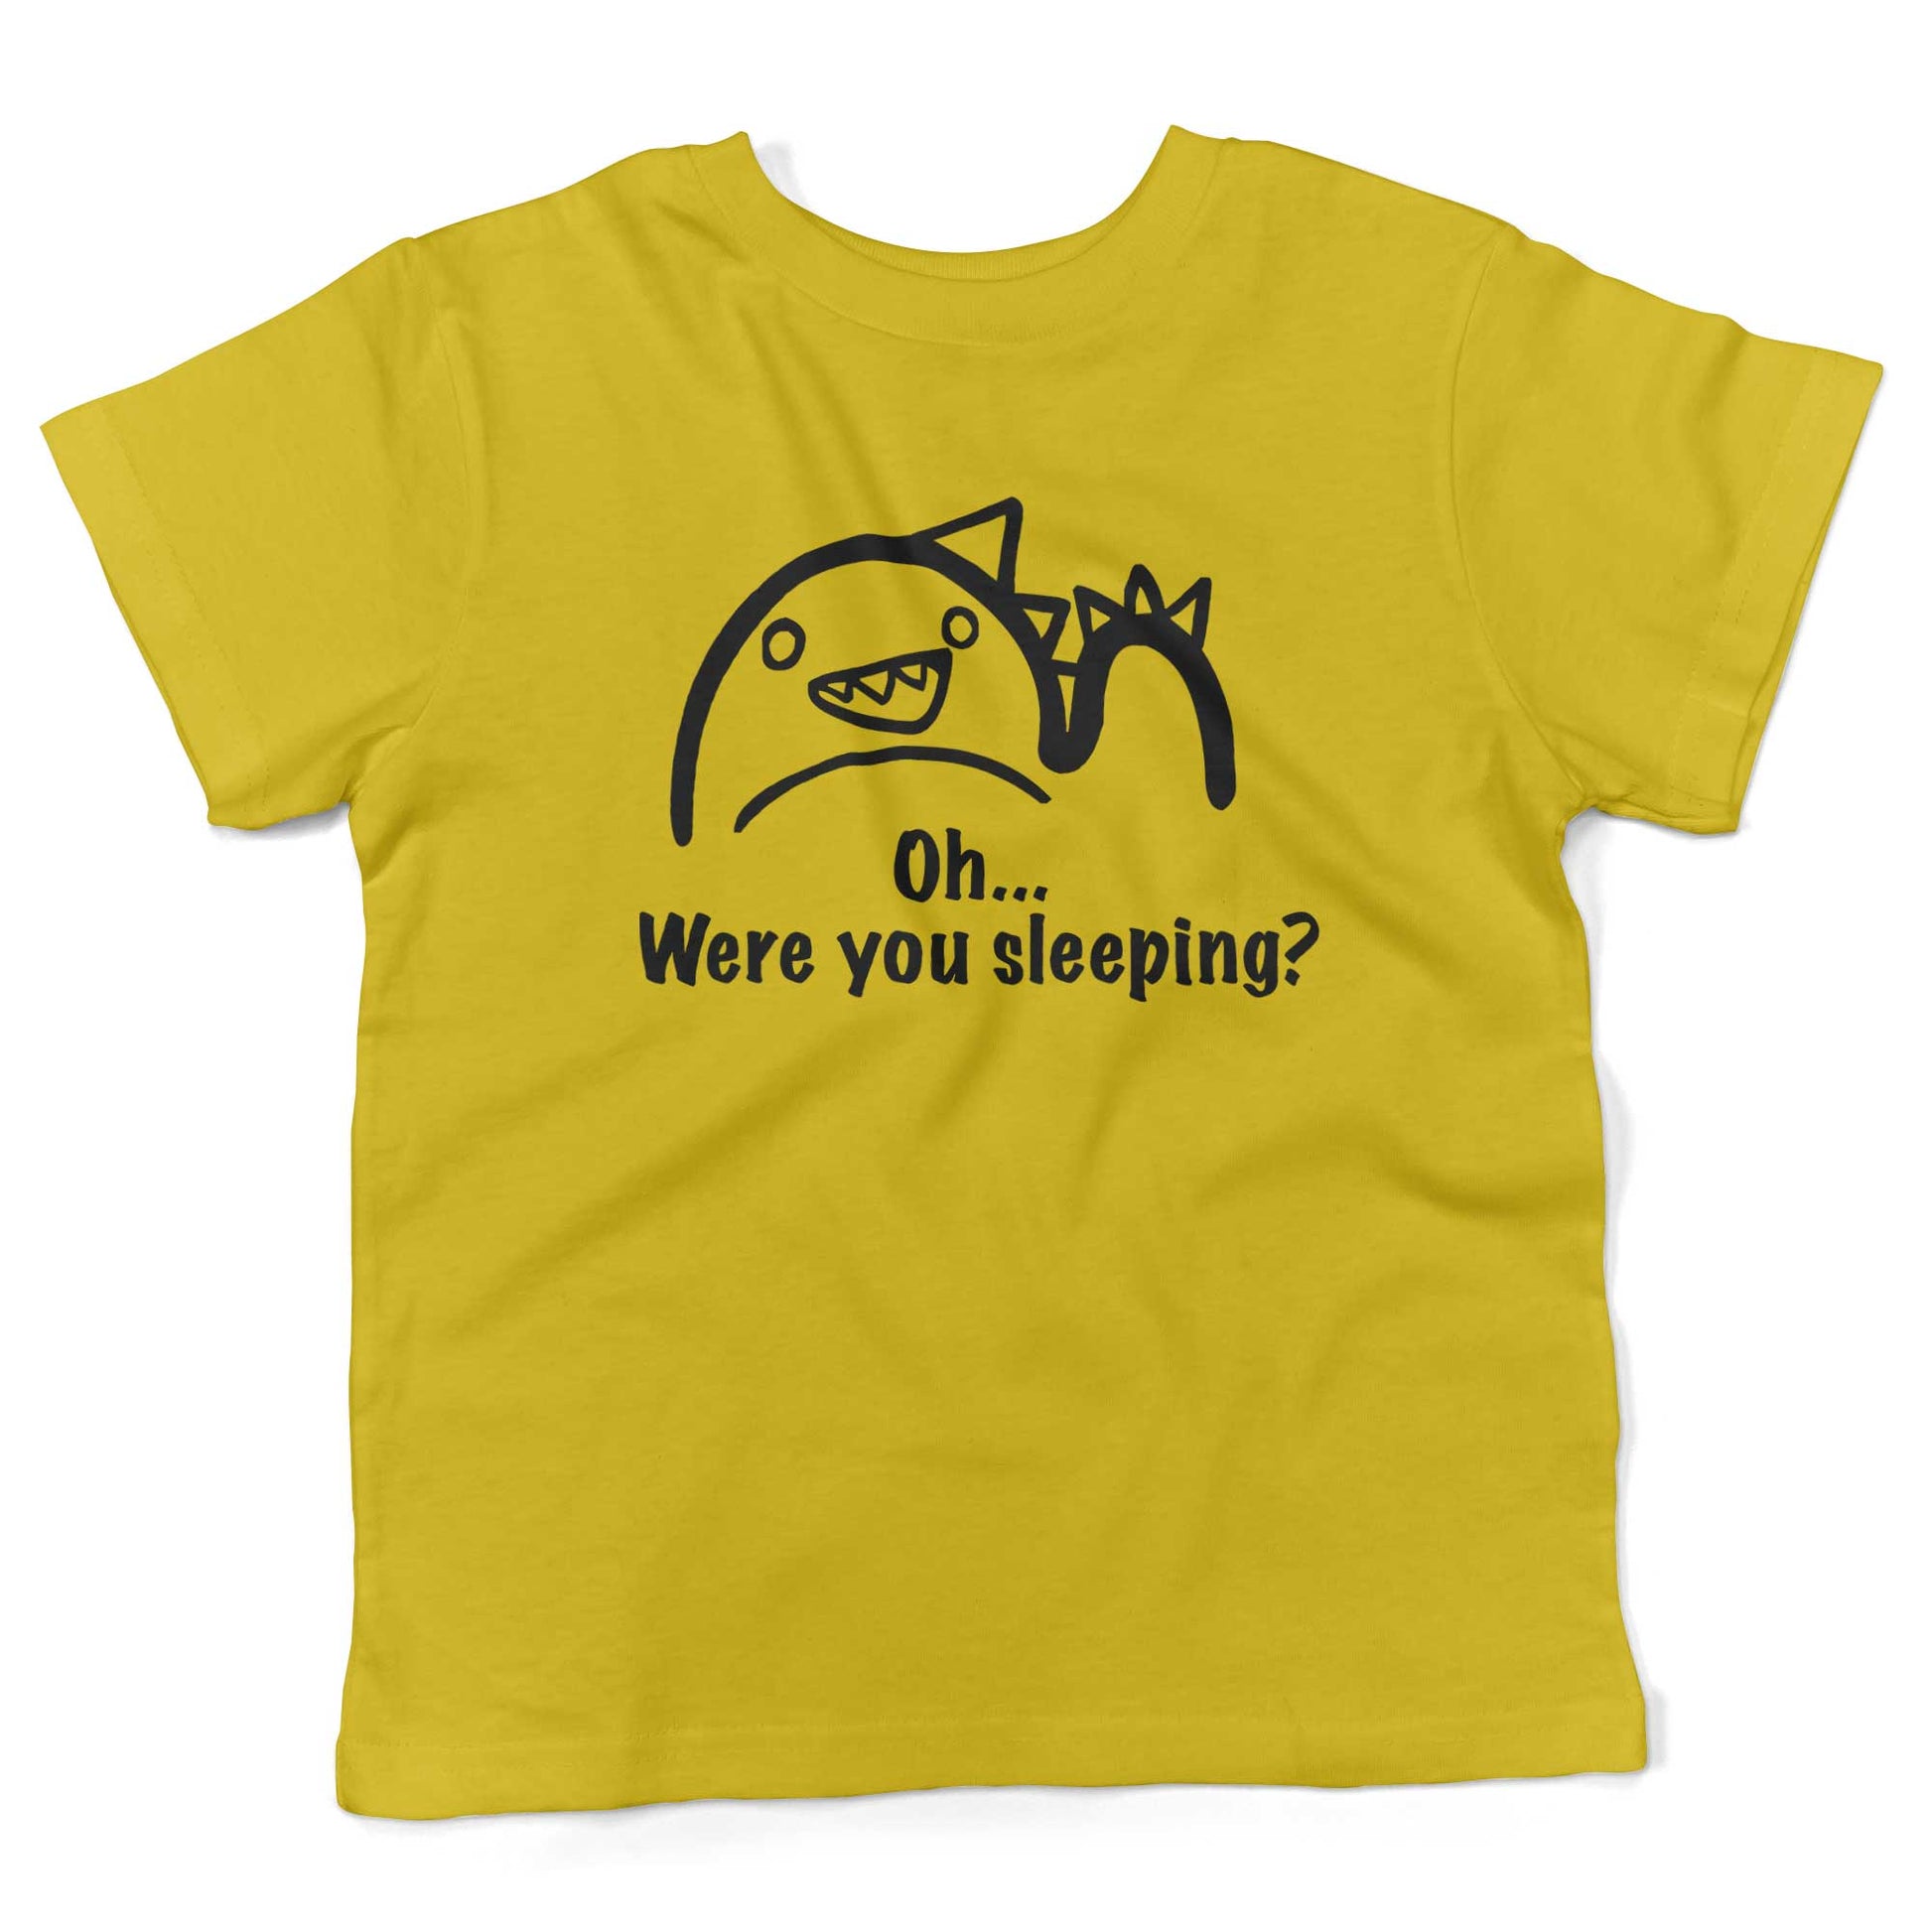 Oh...Were you sleeping? Toddler Shirt-Sunshine Yellow-2T